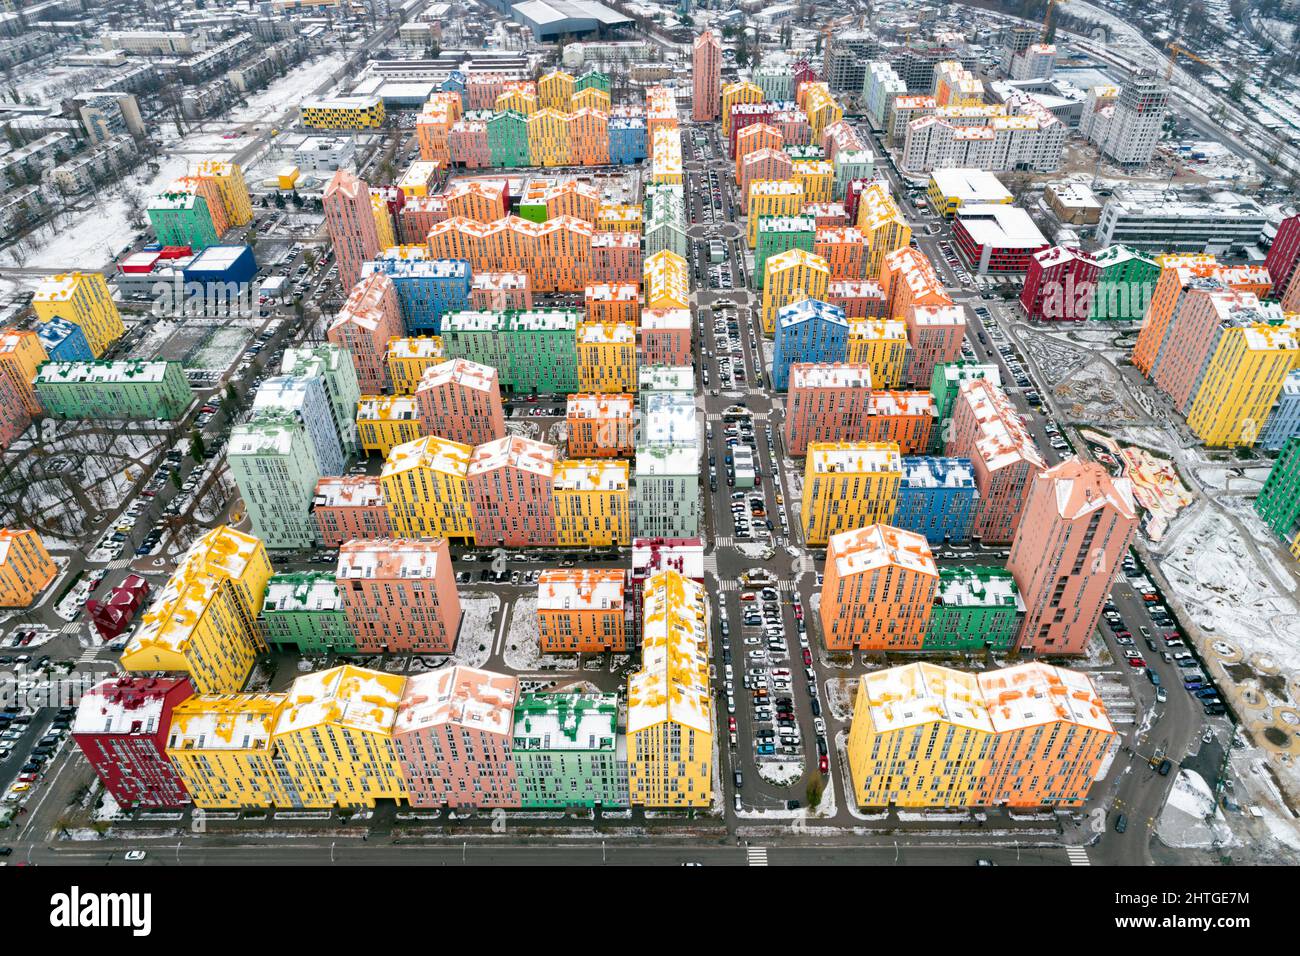 Ukraine in winter, Kyiv colourful blocks of flats modern architecture - Comfort Town complex Stock Photo